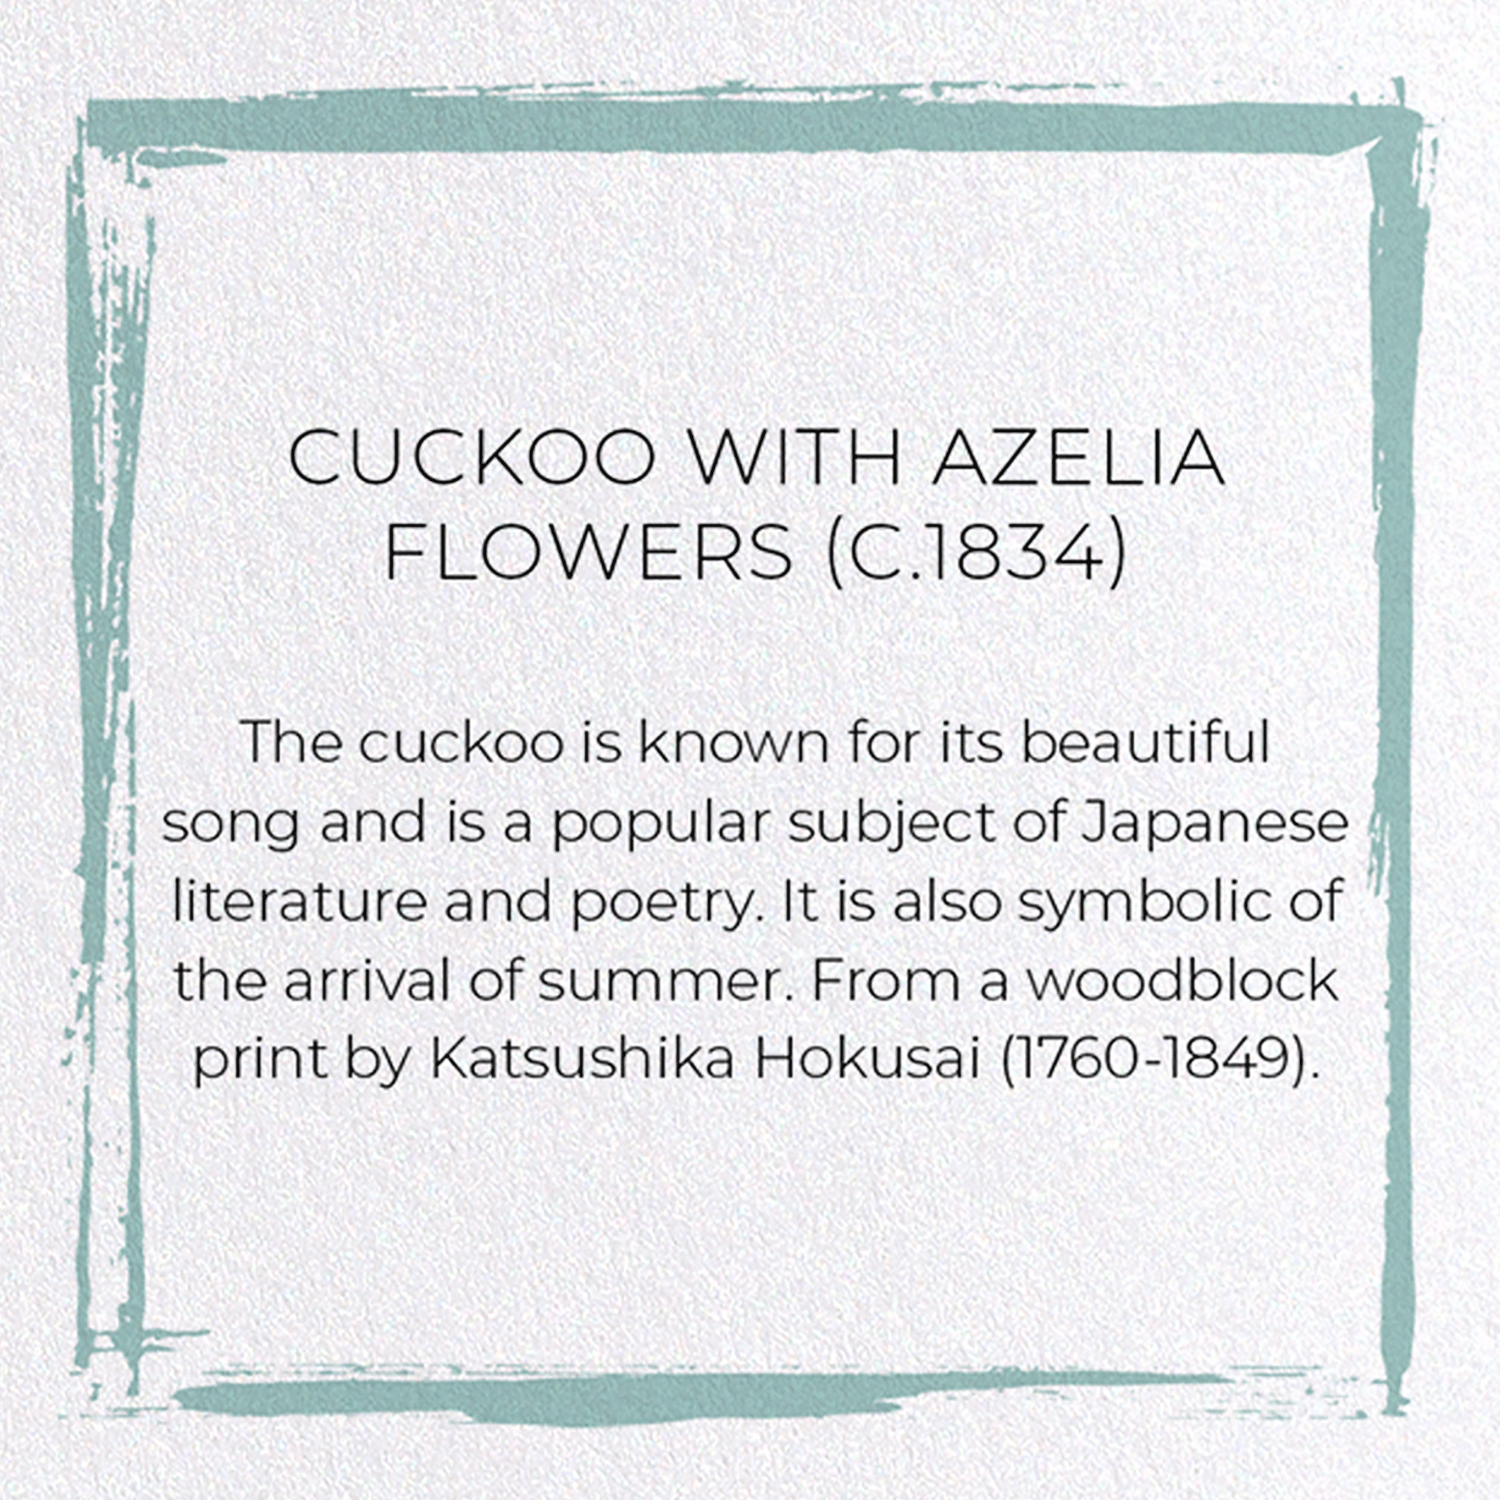 CUCKOO WITH AZELIA FLOWERS (C.1834): Japanese Greeting Card